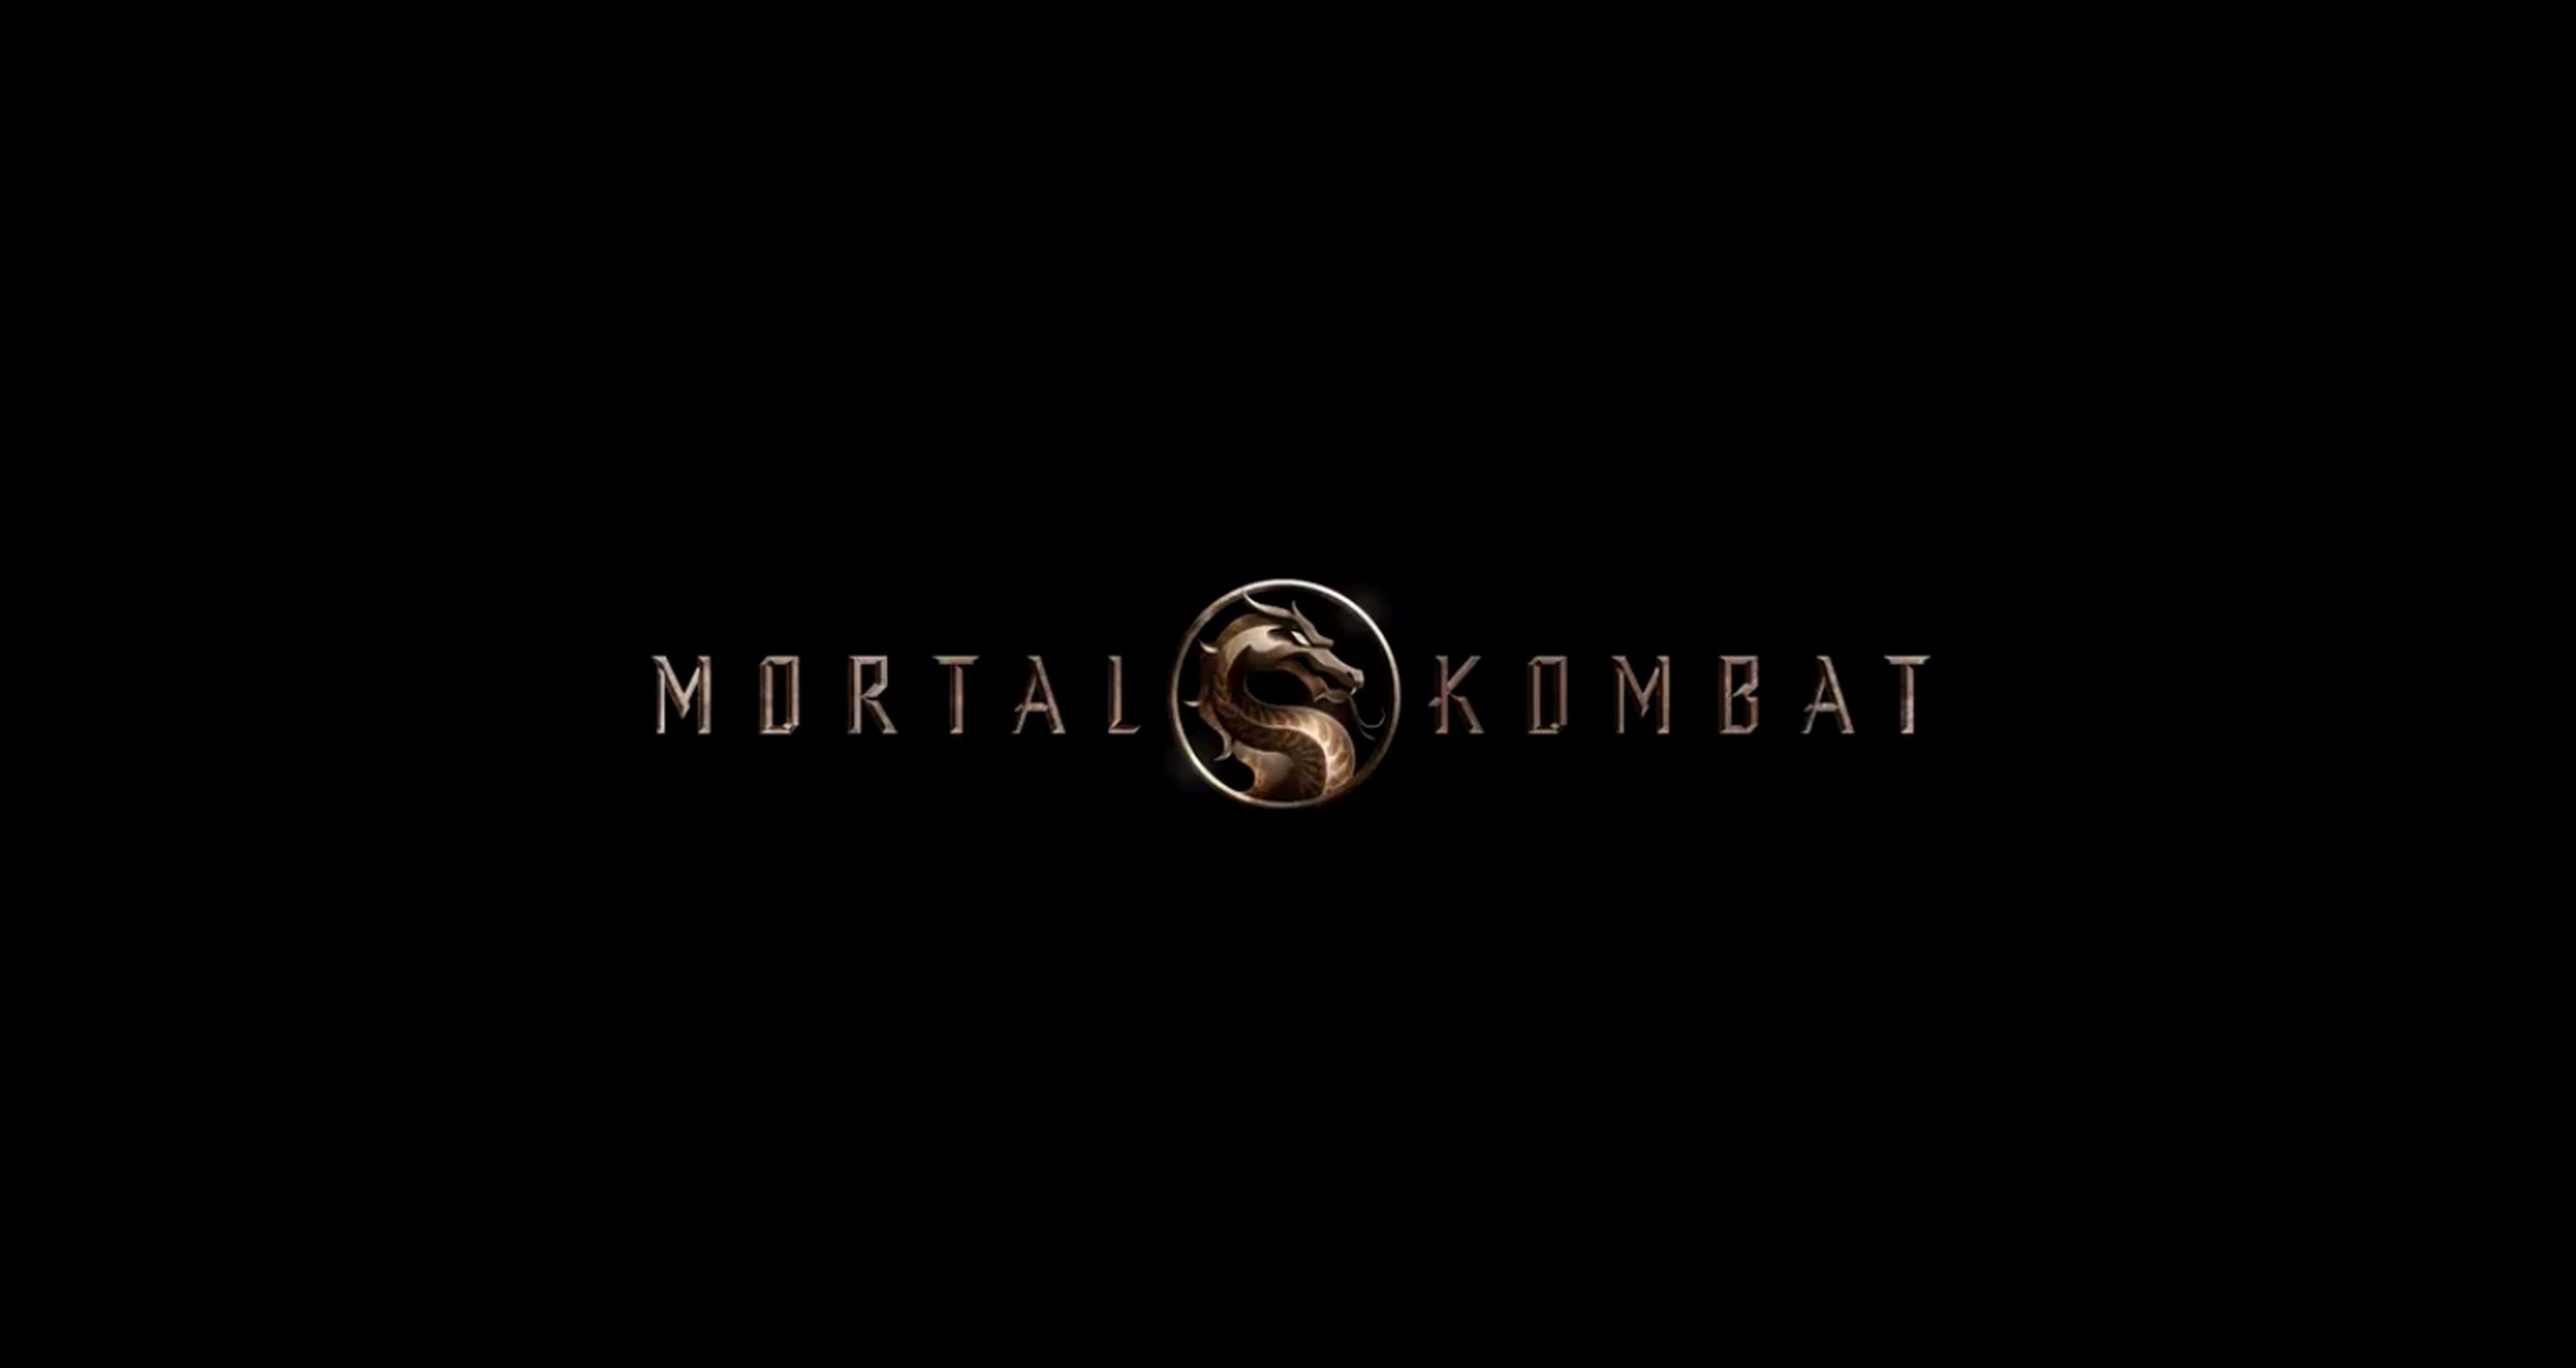 Mortal Kombat 2021